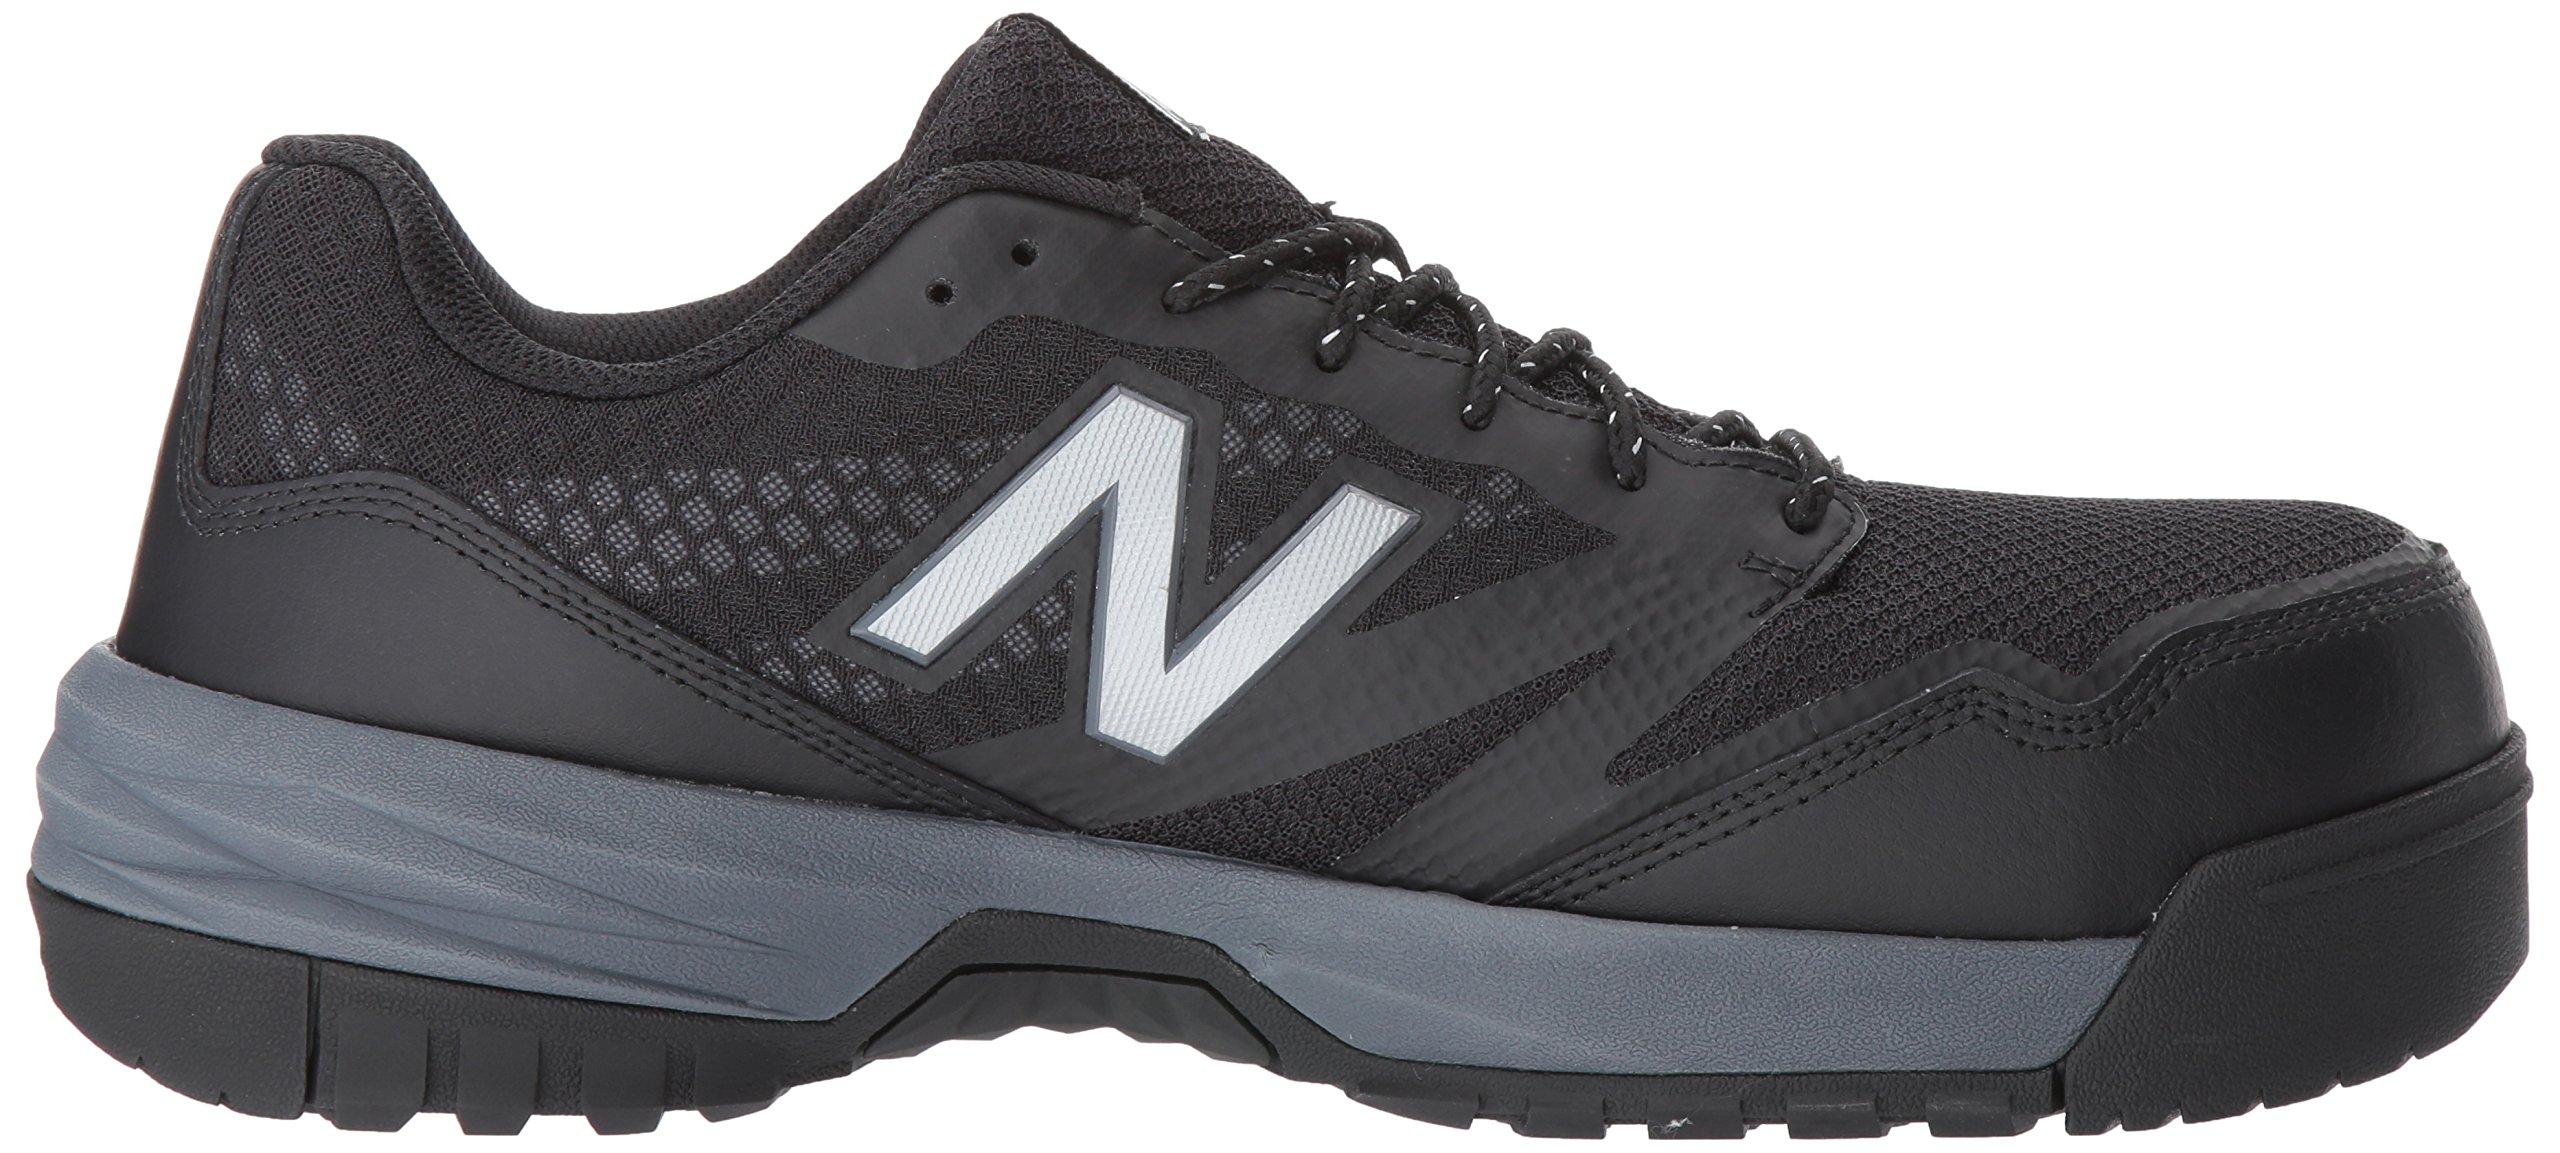 New Balance Men's Composite Toe 589 V1 Industrial Shoe